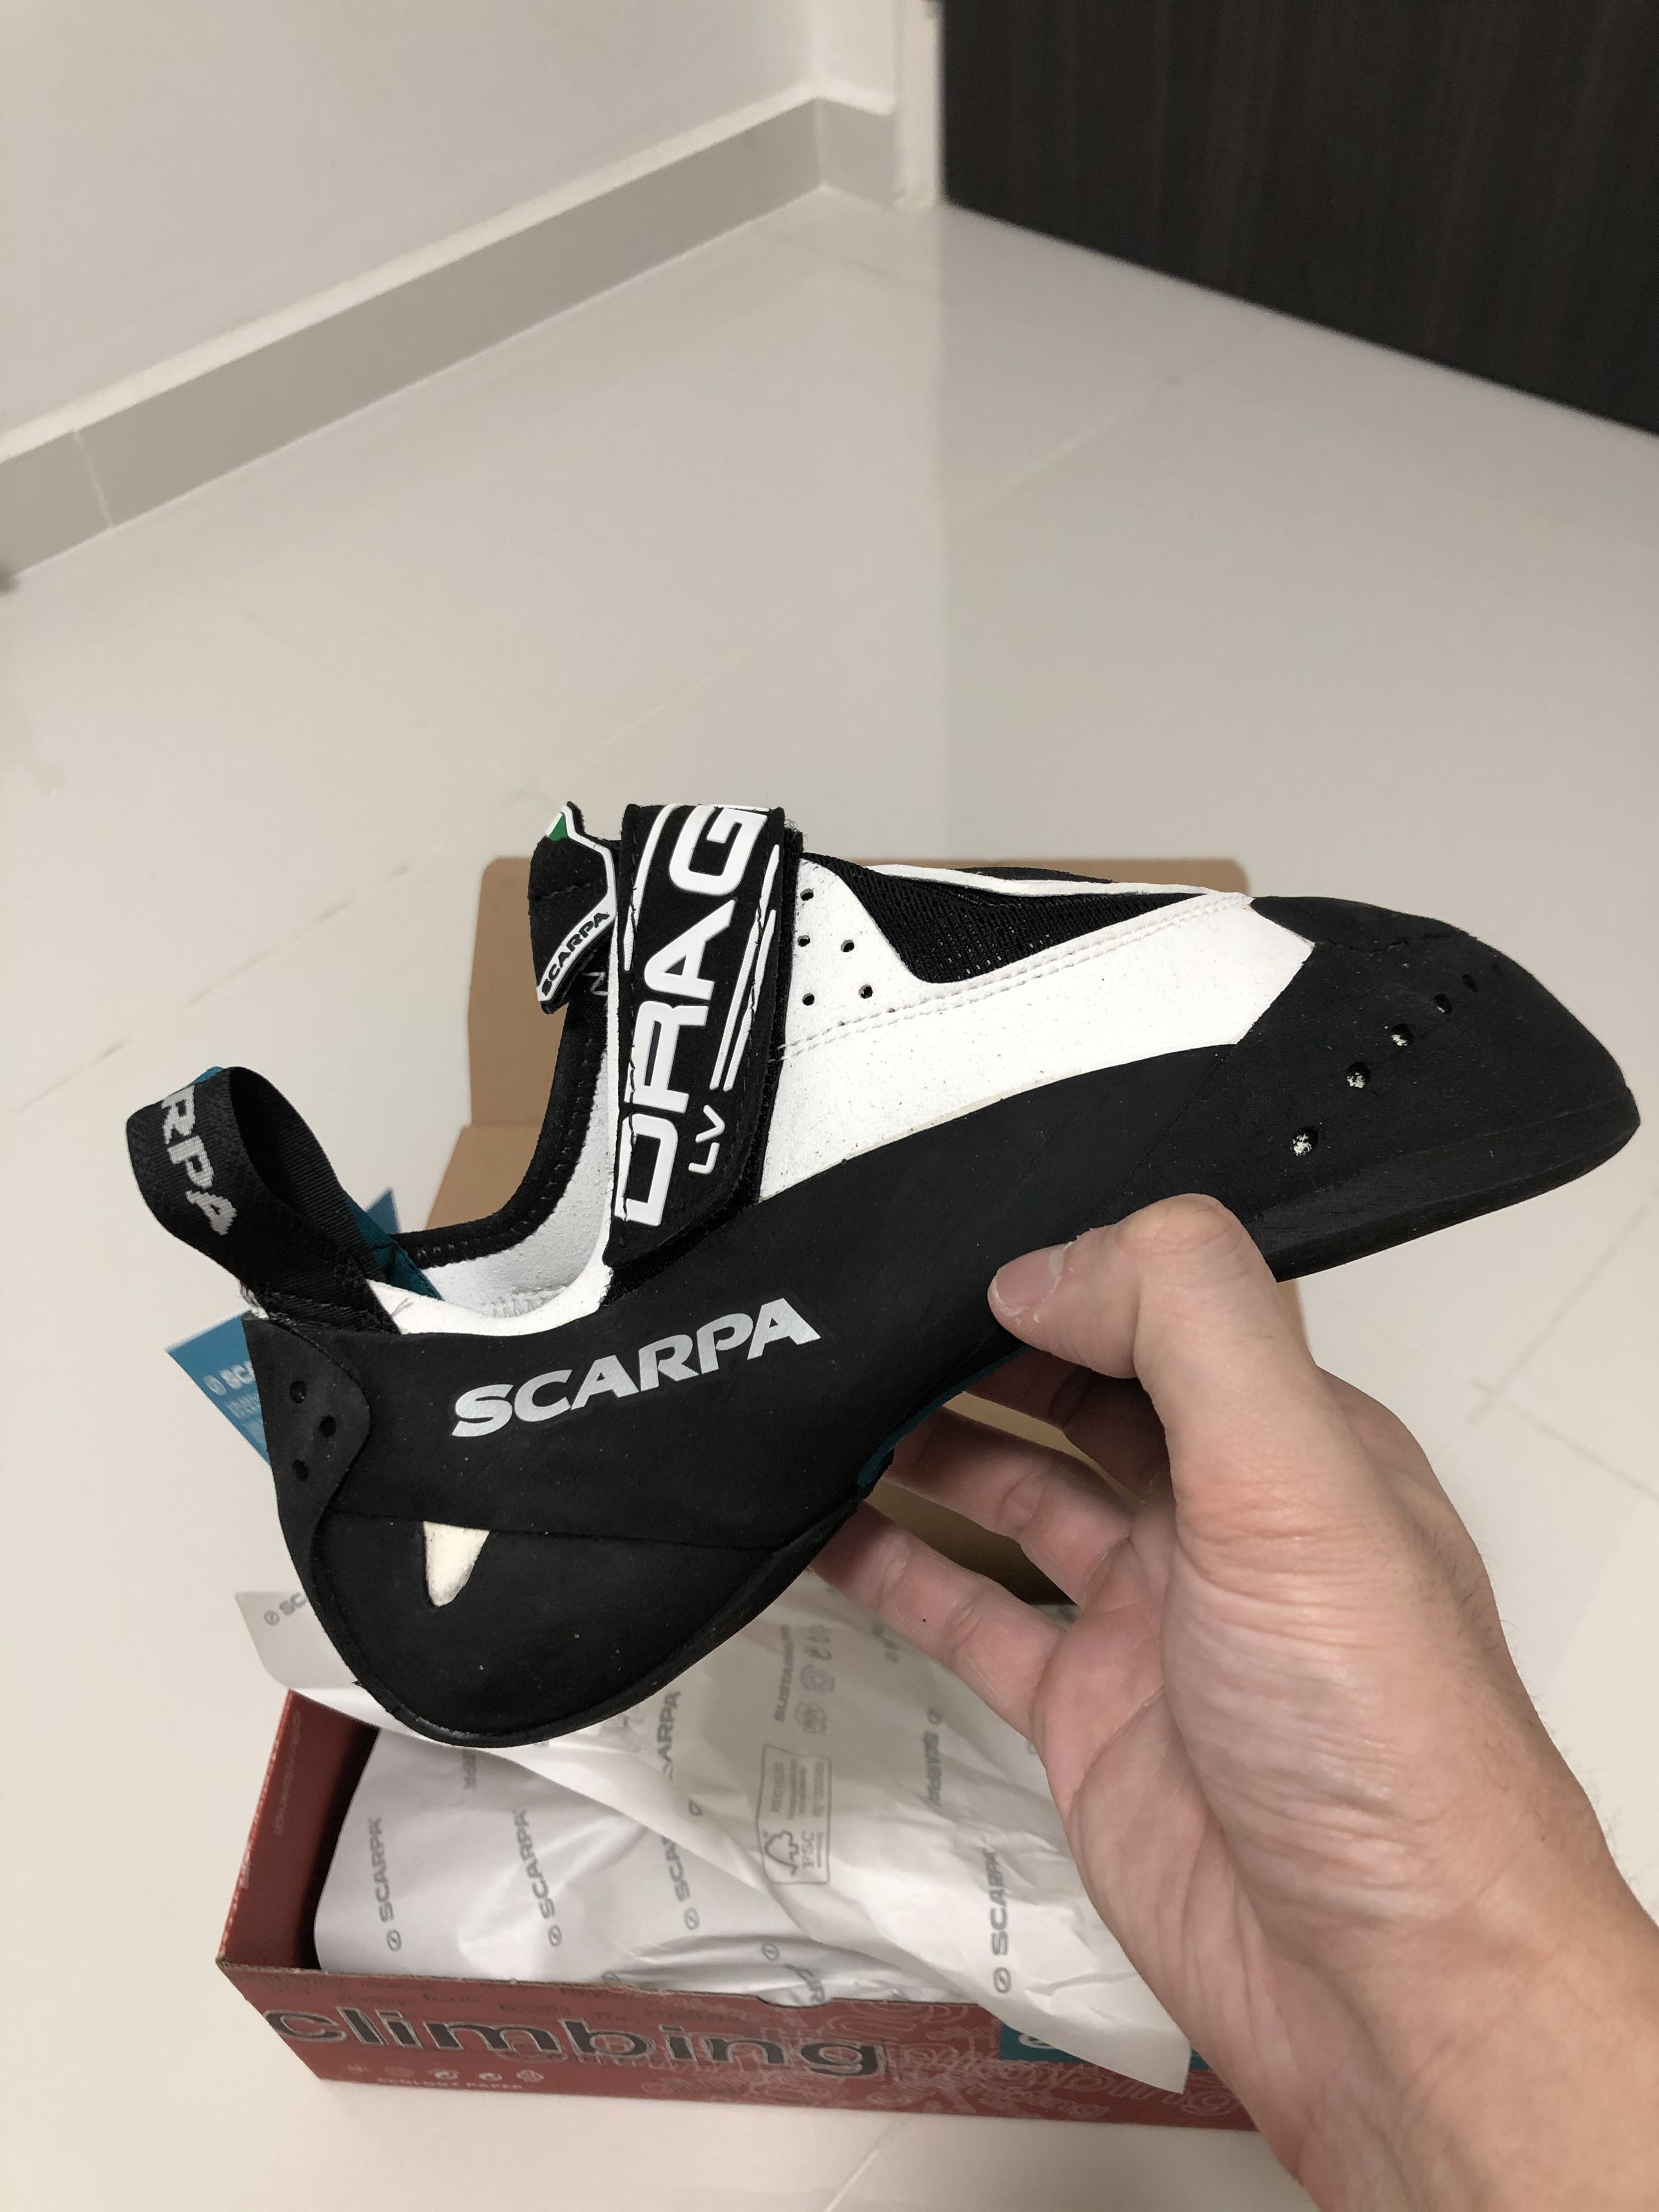 Used Scarpa Drago LV Climbing Shoes